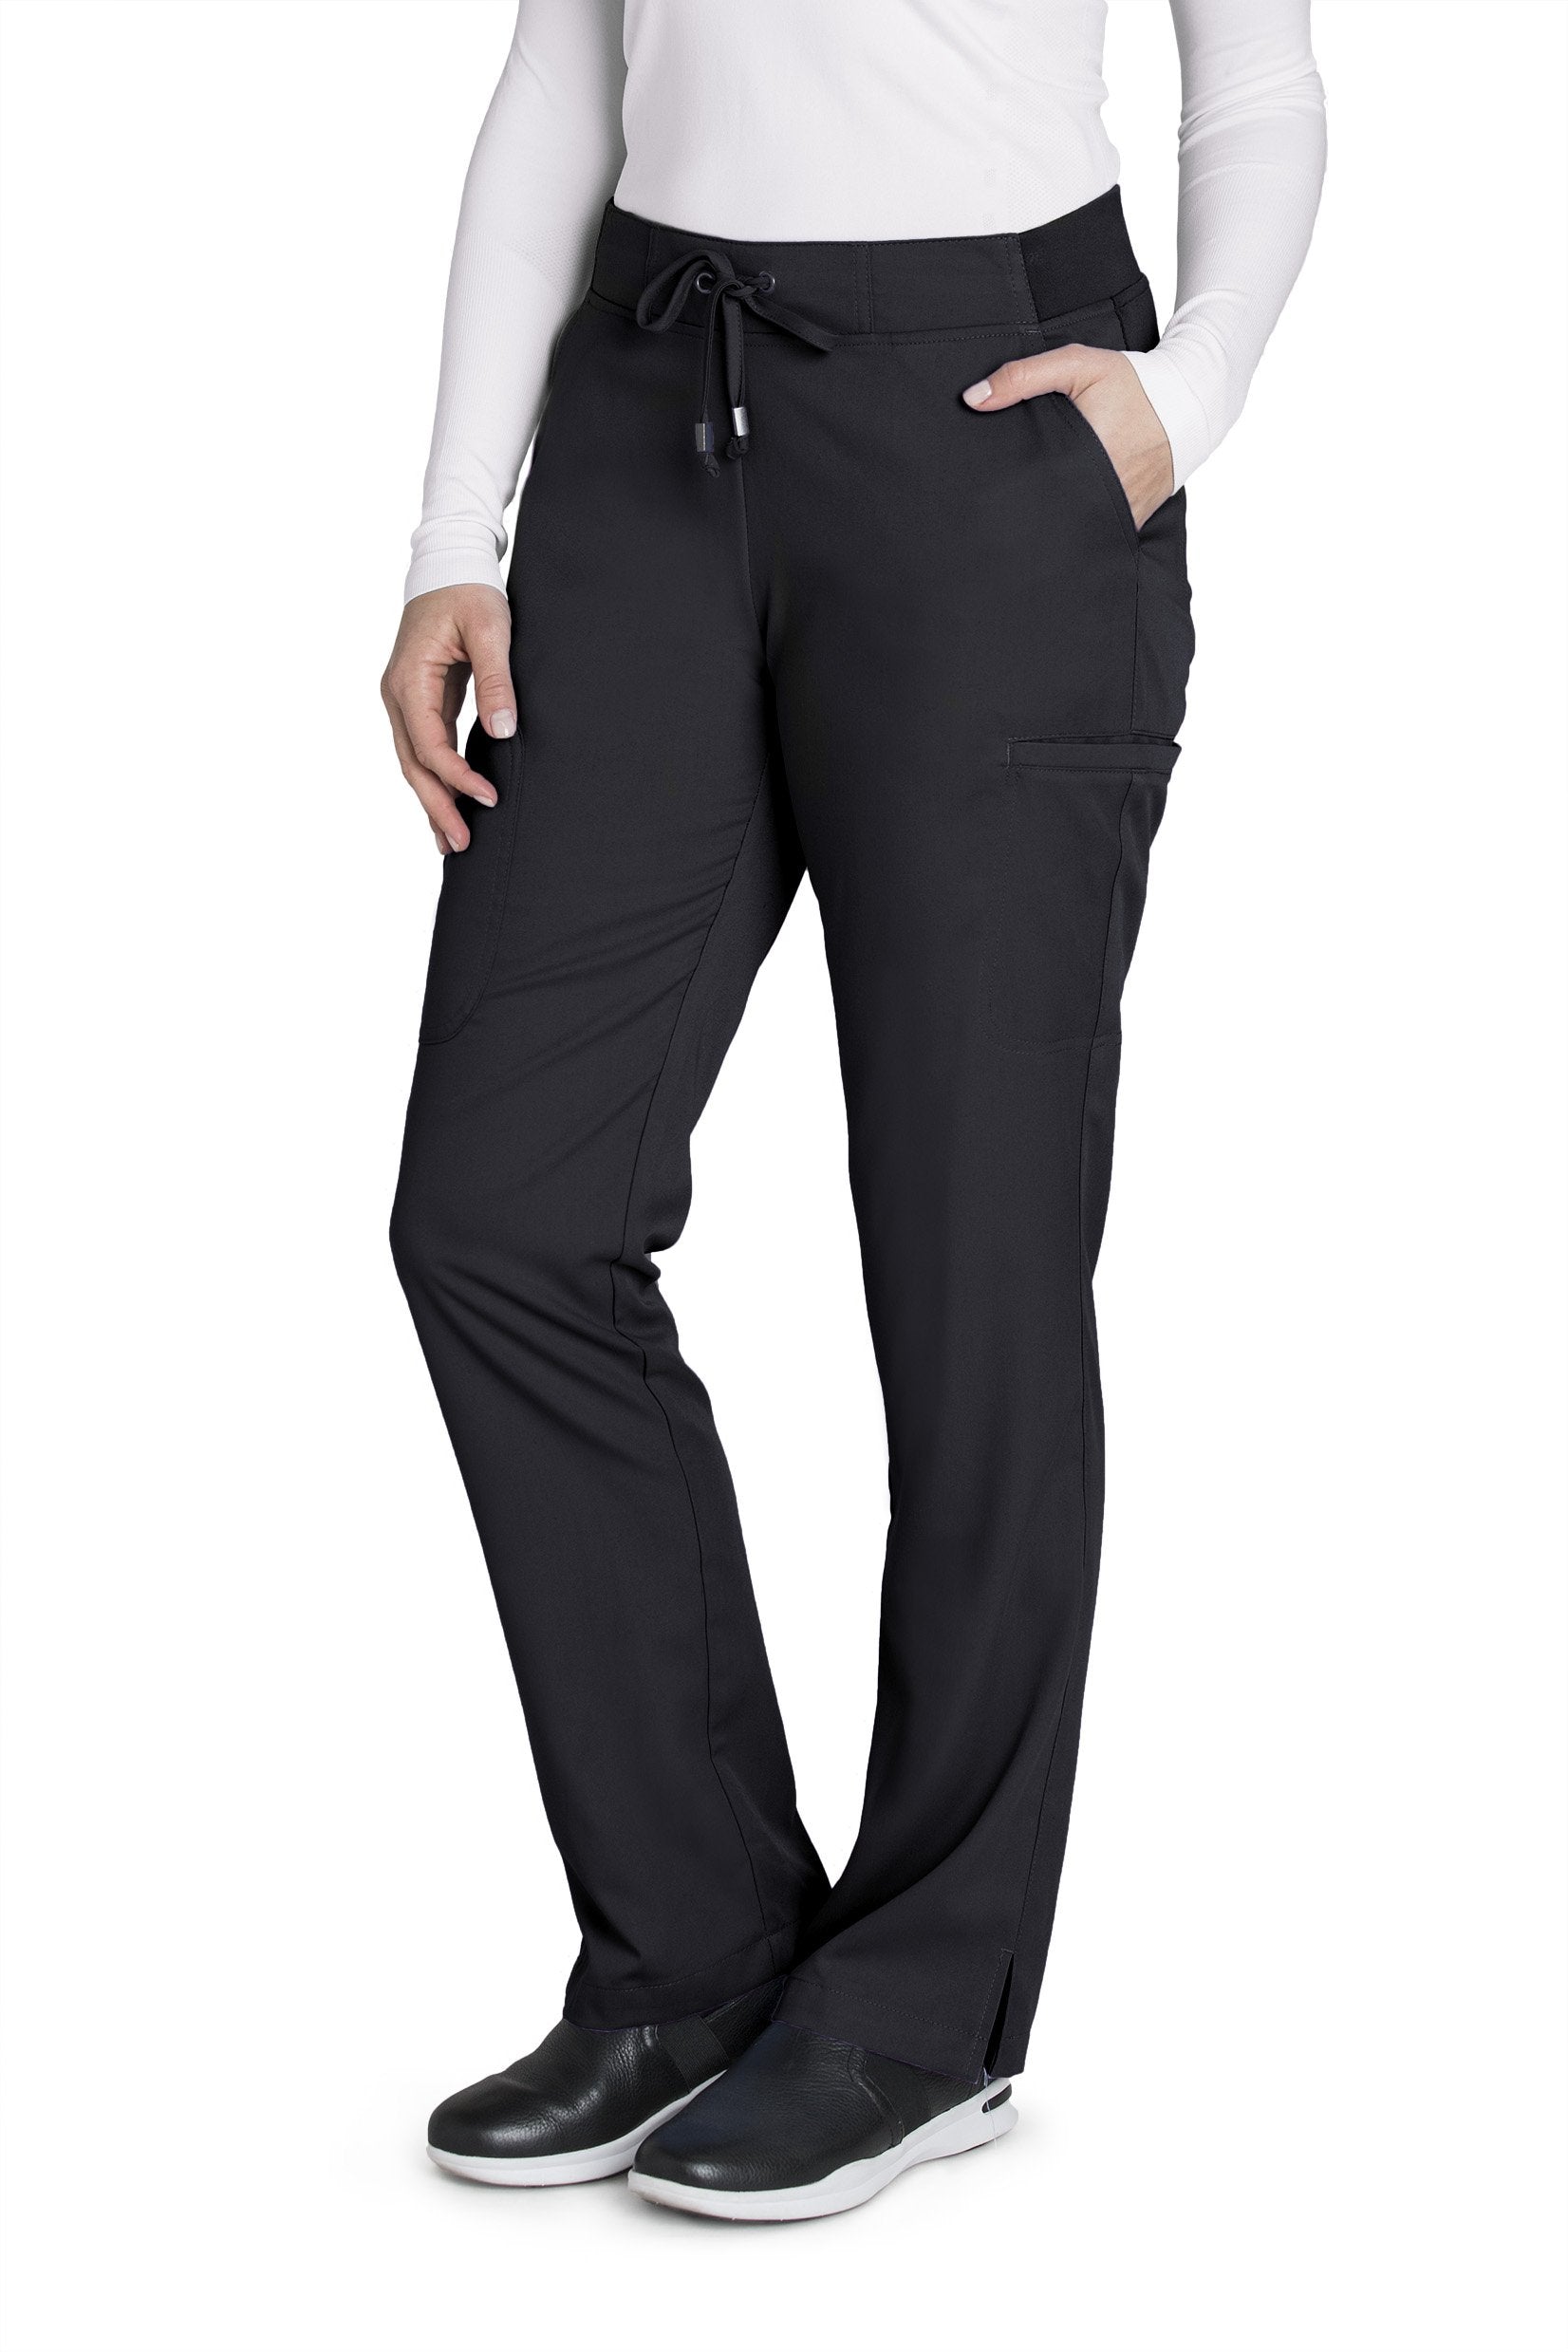 Grey's Anatomy 4277 Tall 6-Pocket Pant – The Uniform Shoppe